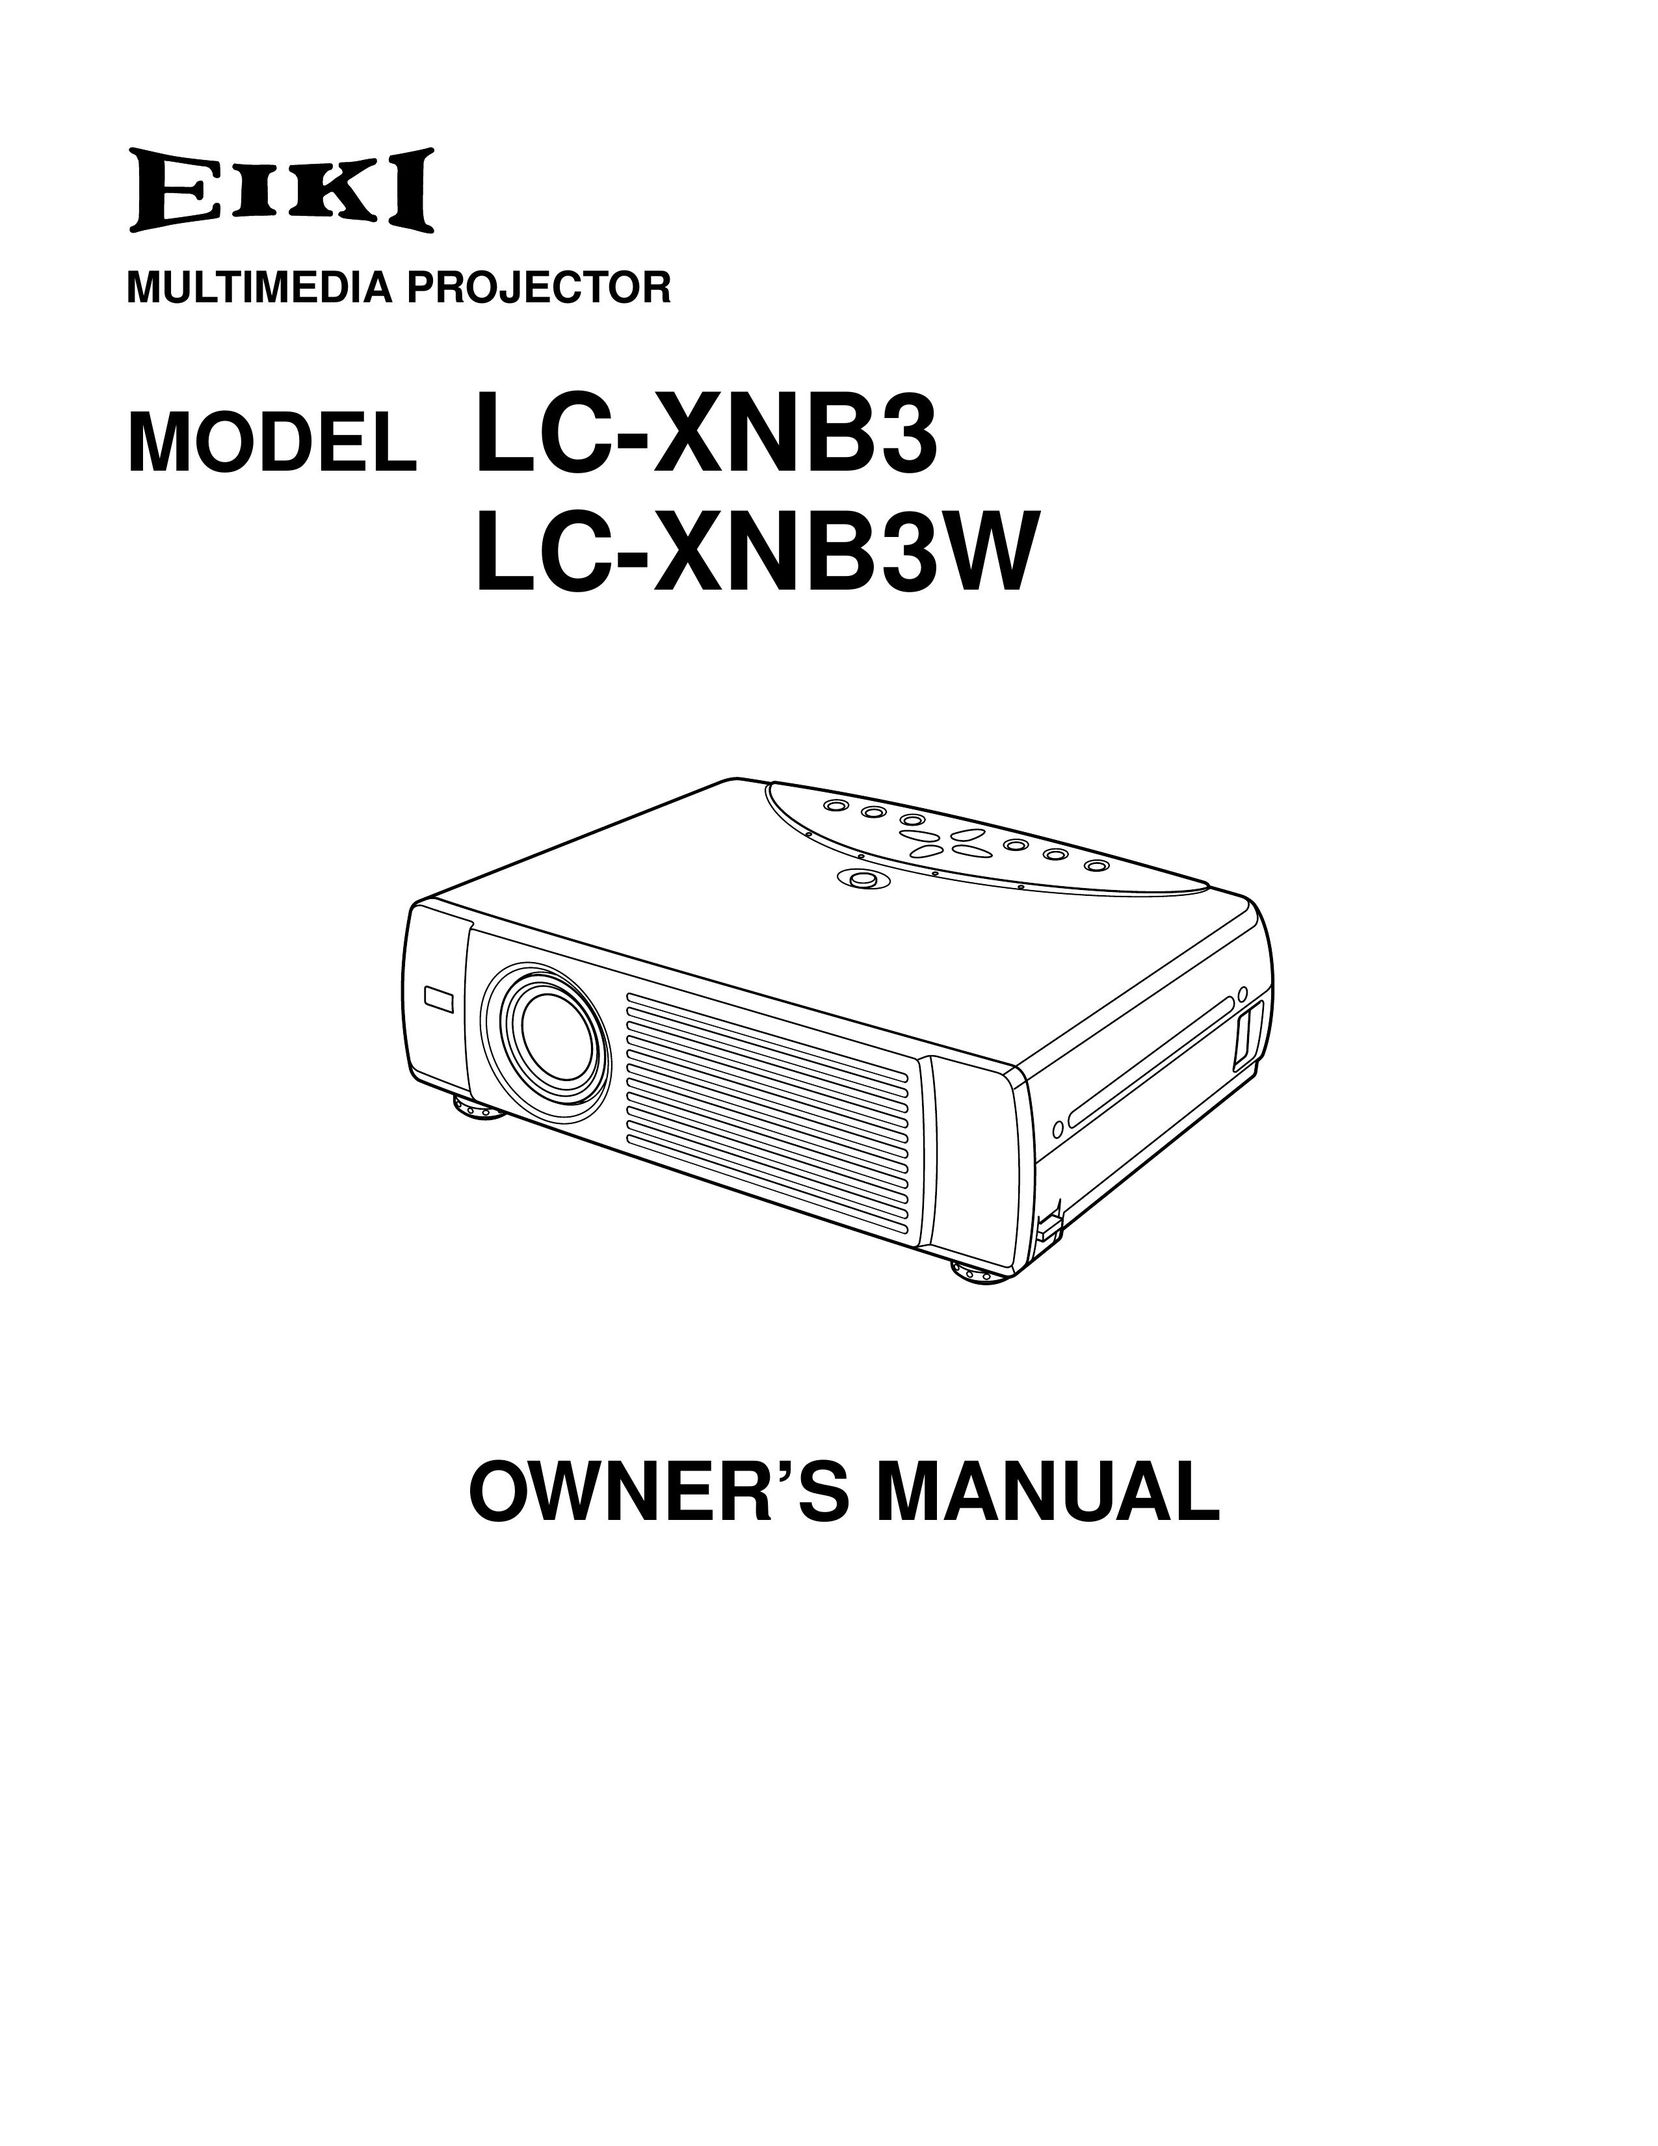 Eiki LC-XNB3W Network Card User Manual